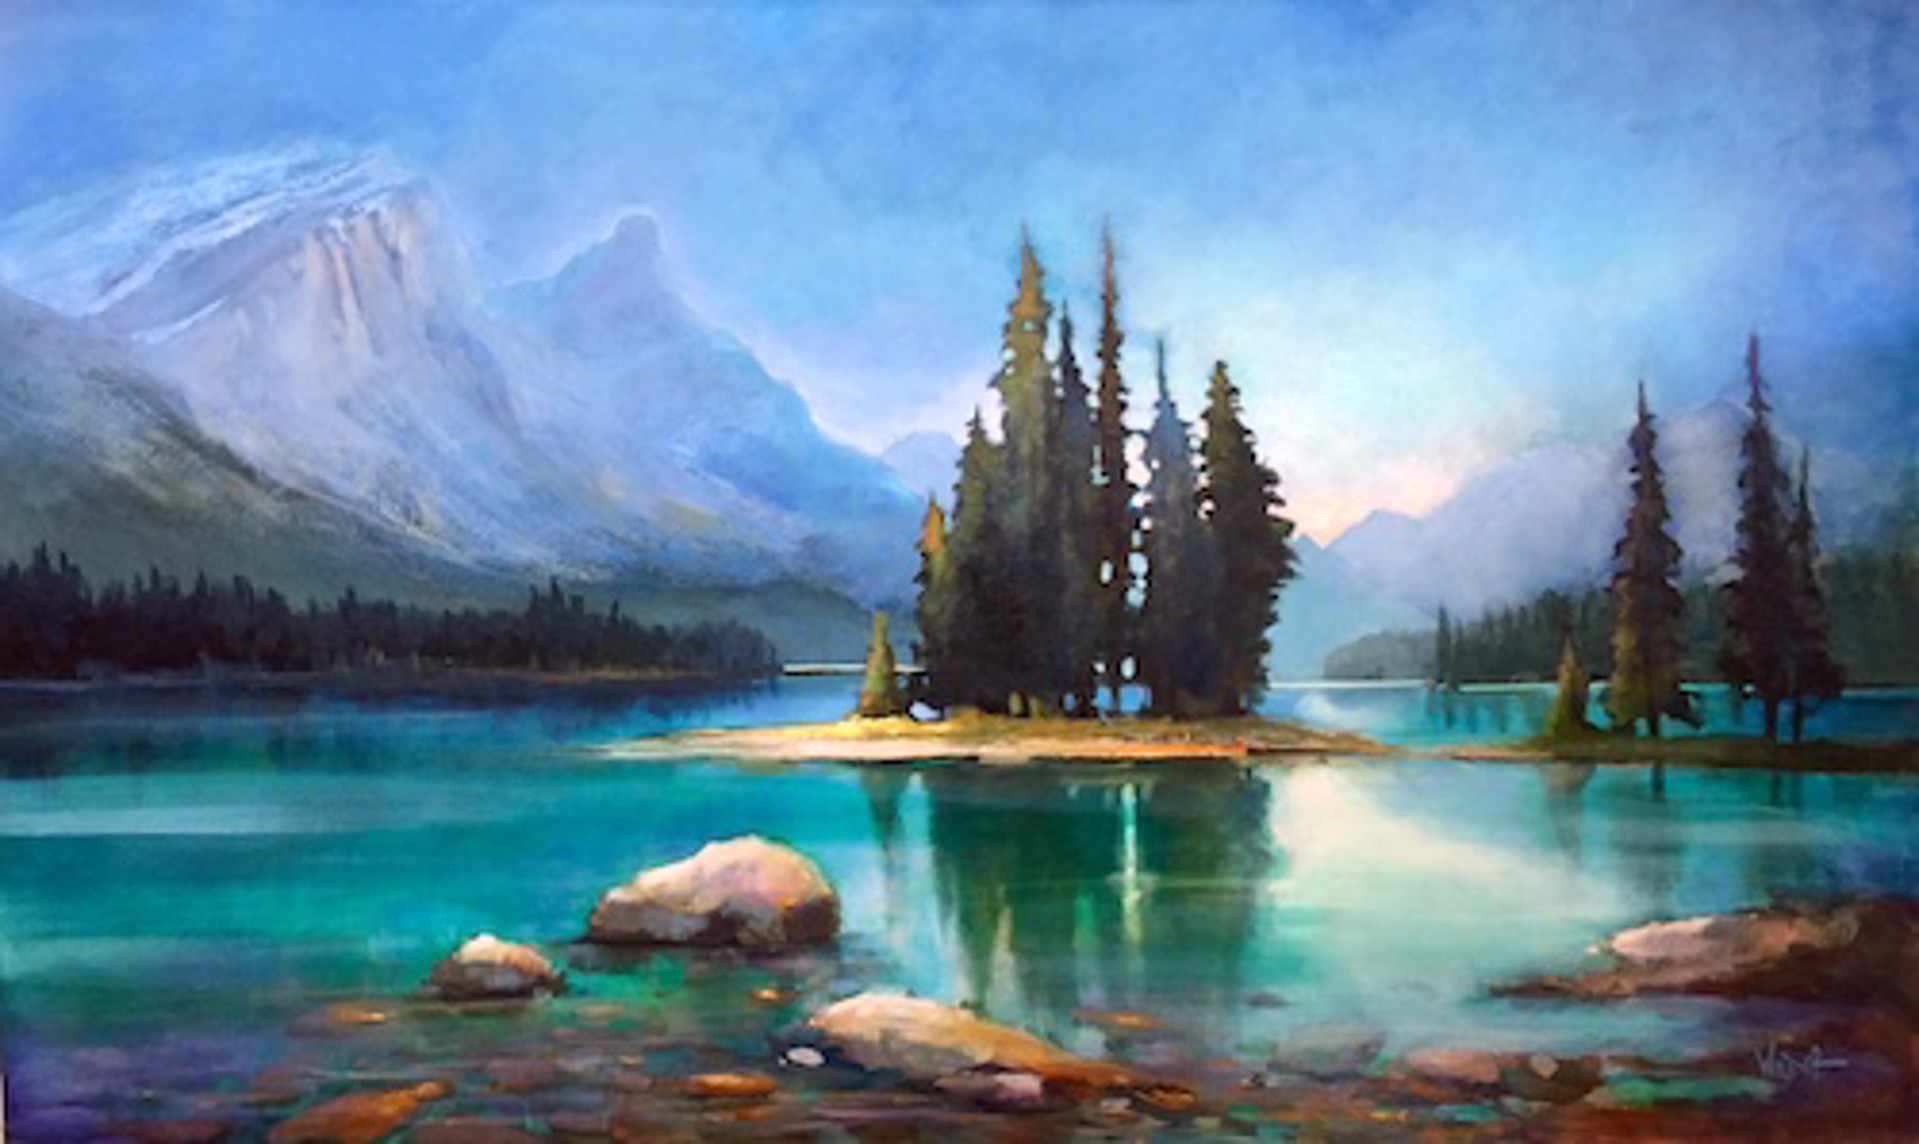 Maligne Lake & Spirit Island by Linda Wilder